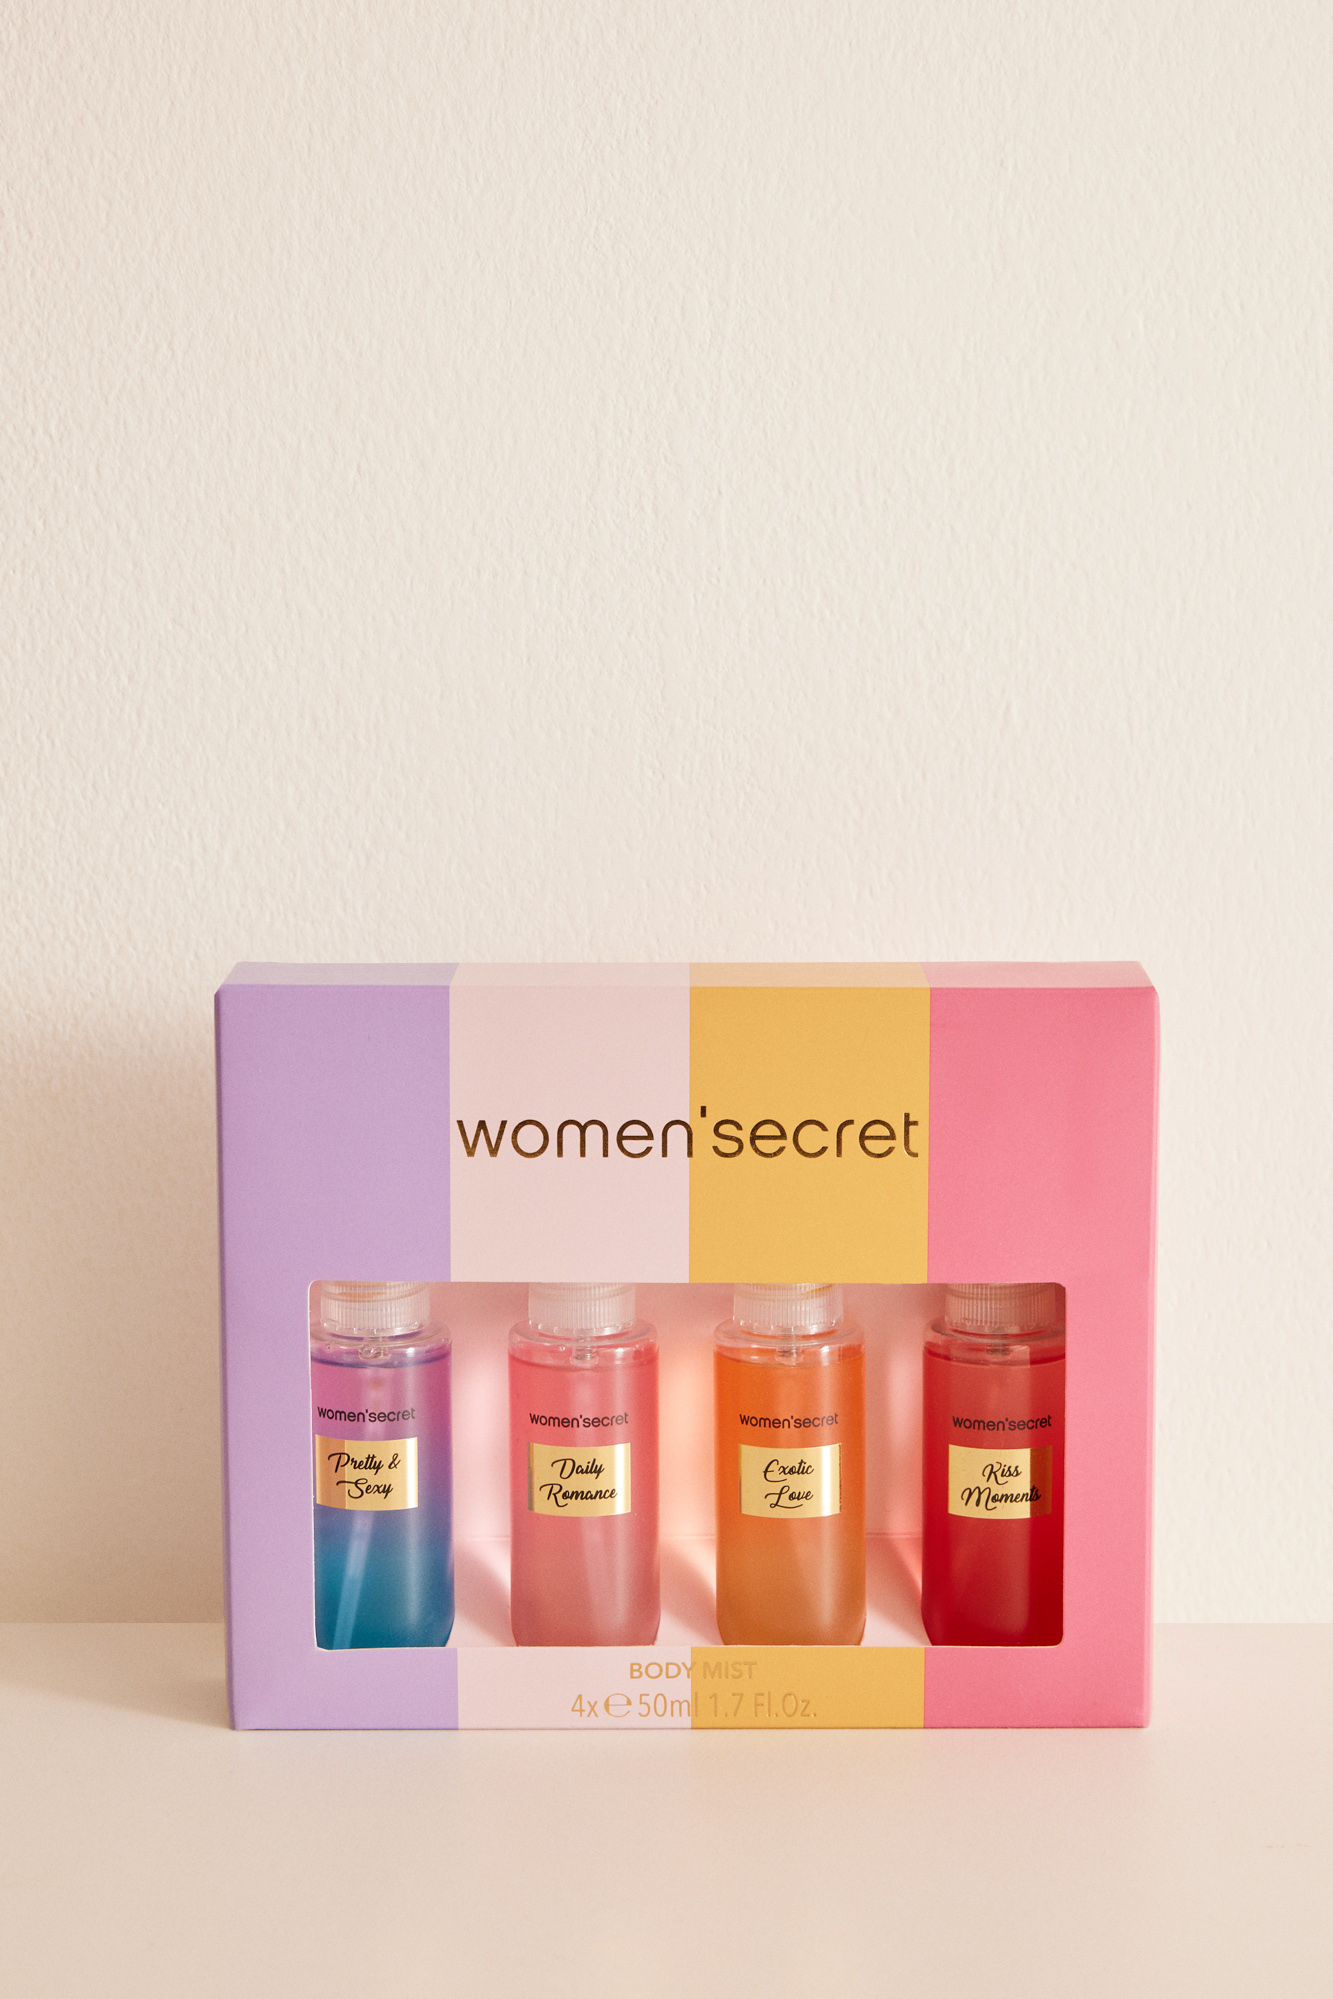 Kit Women's Secret Gift Set - Body Mist 4x50ml - Akin Shop